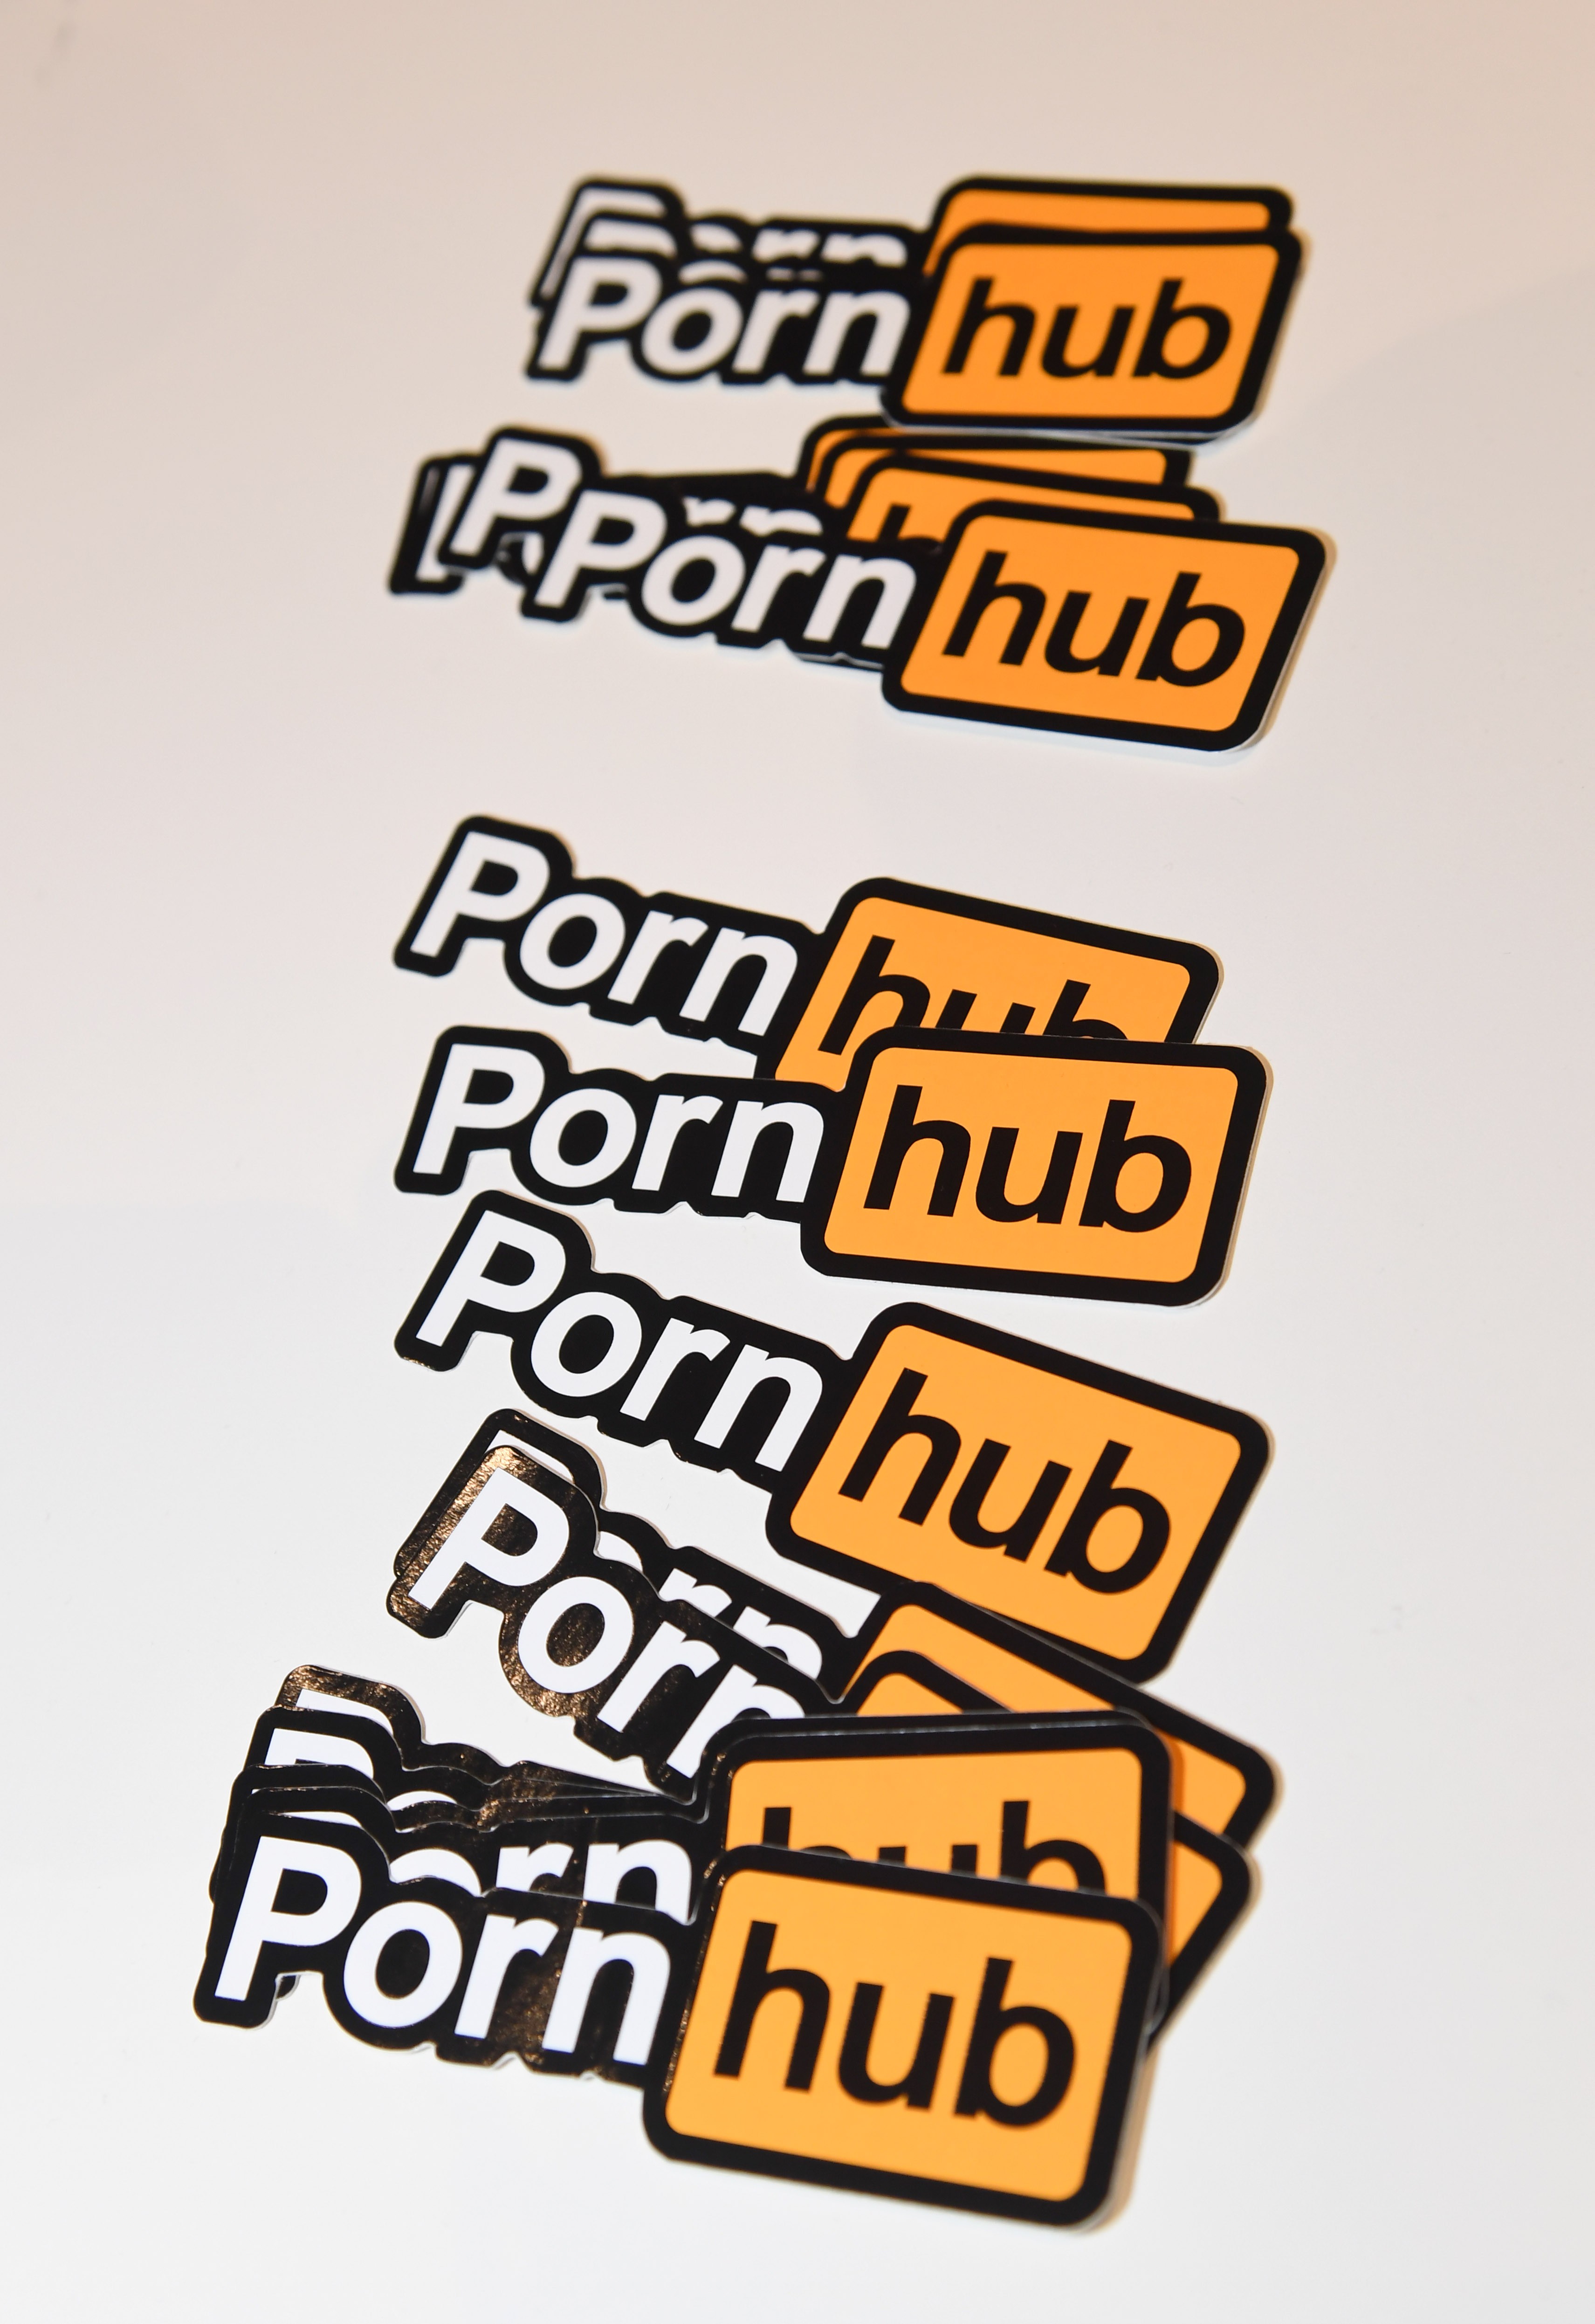 Plrnhub - Pornhub Just Purged All Unverified Content From the Platform